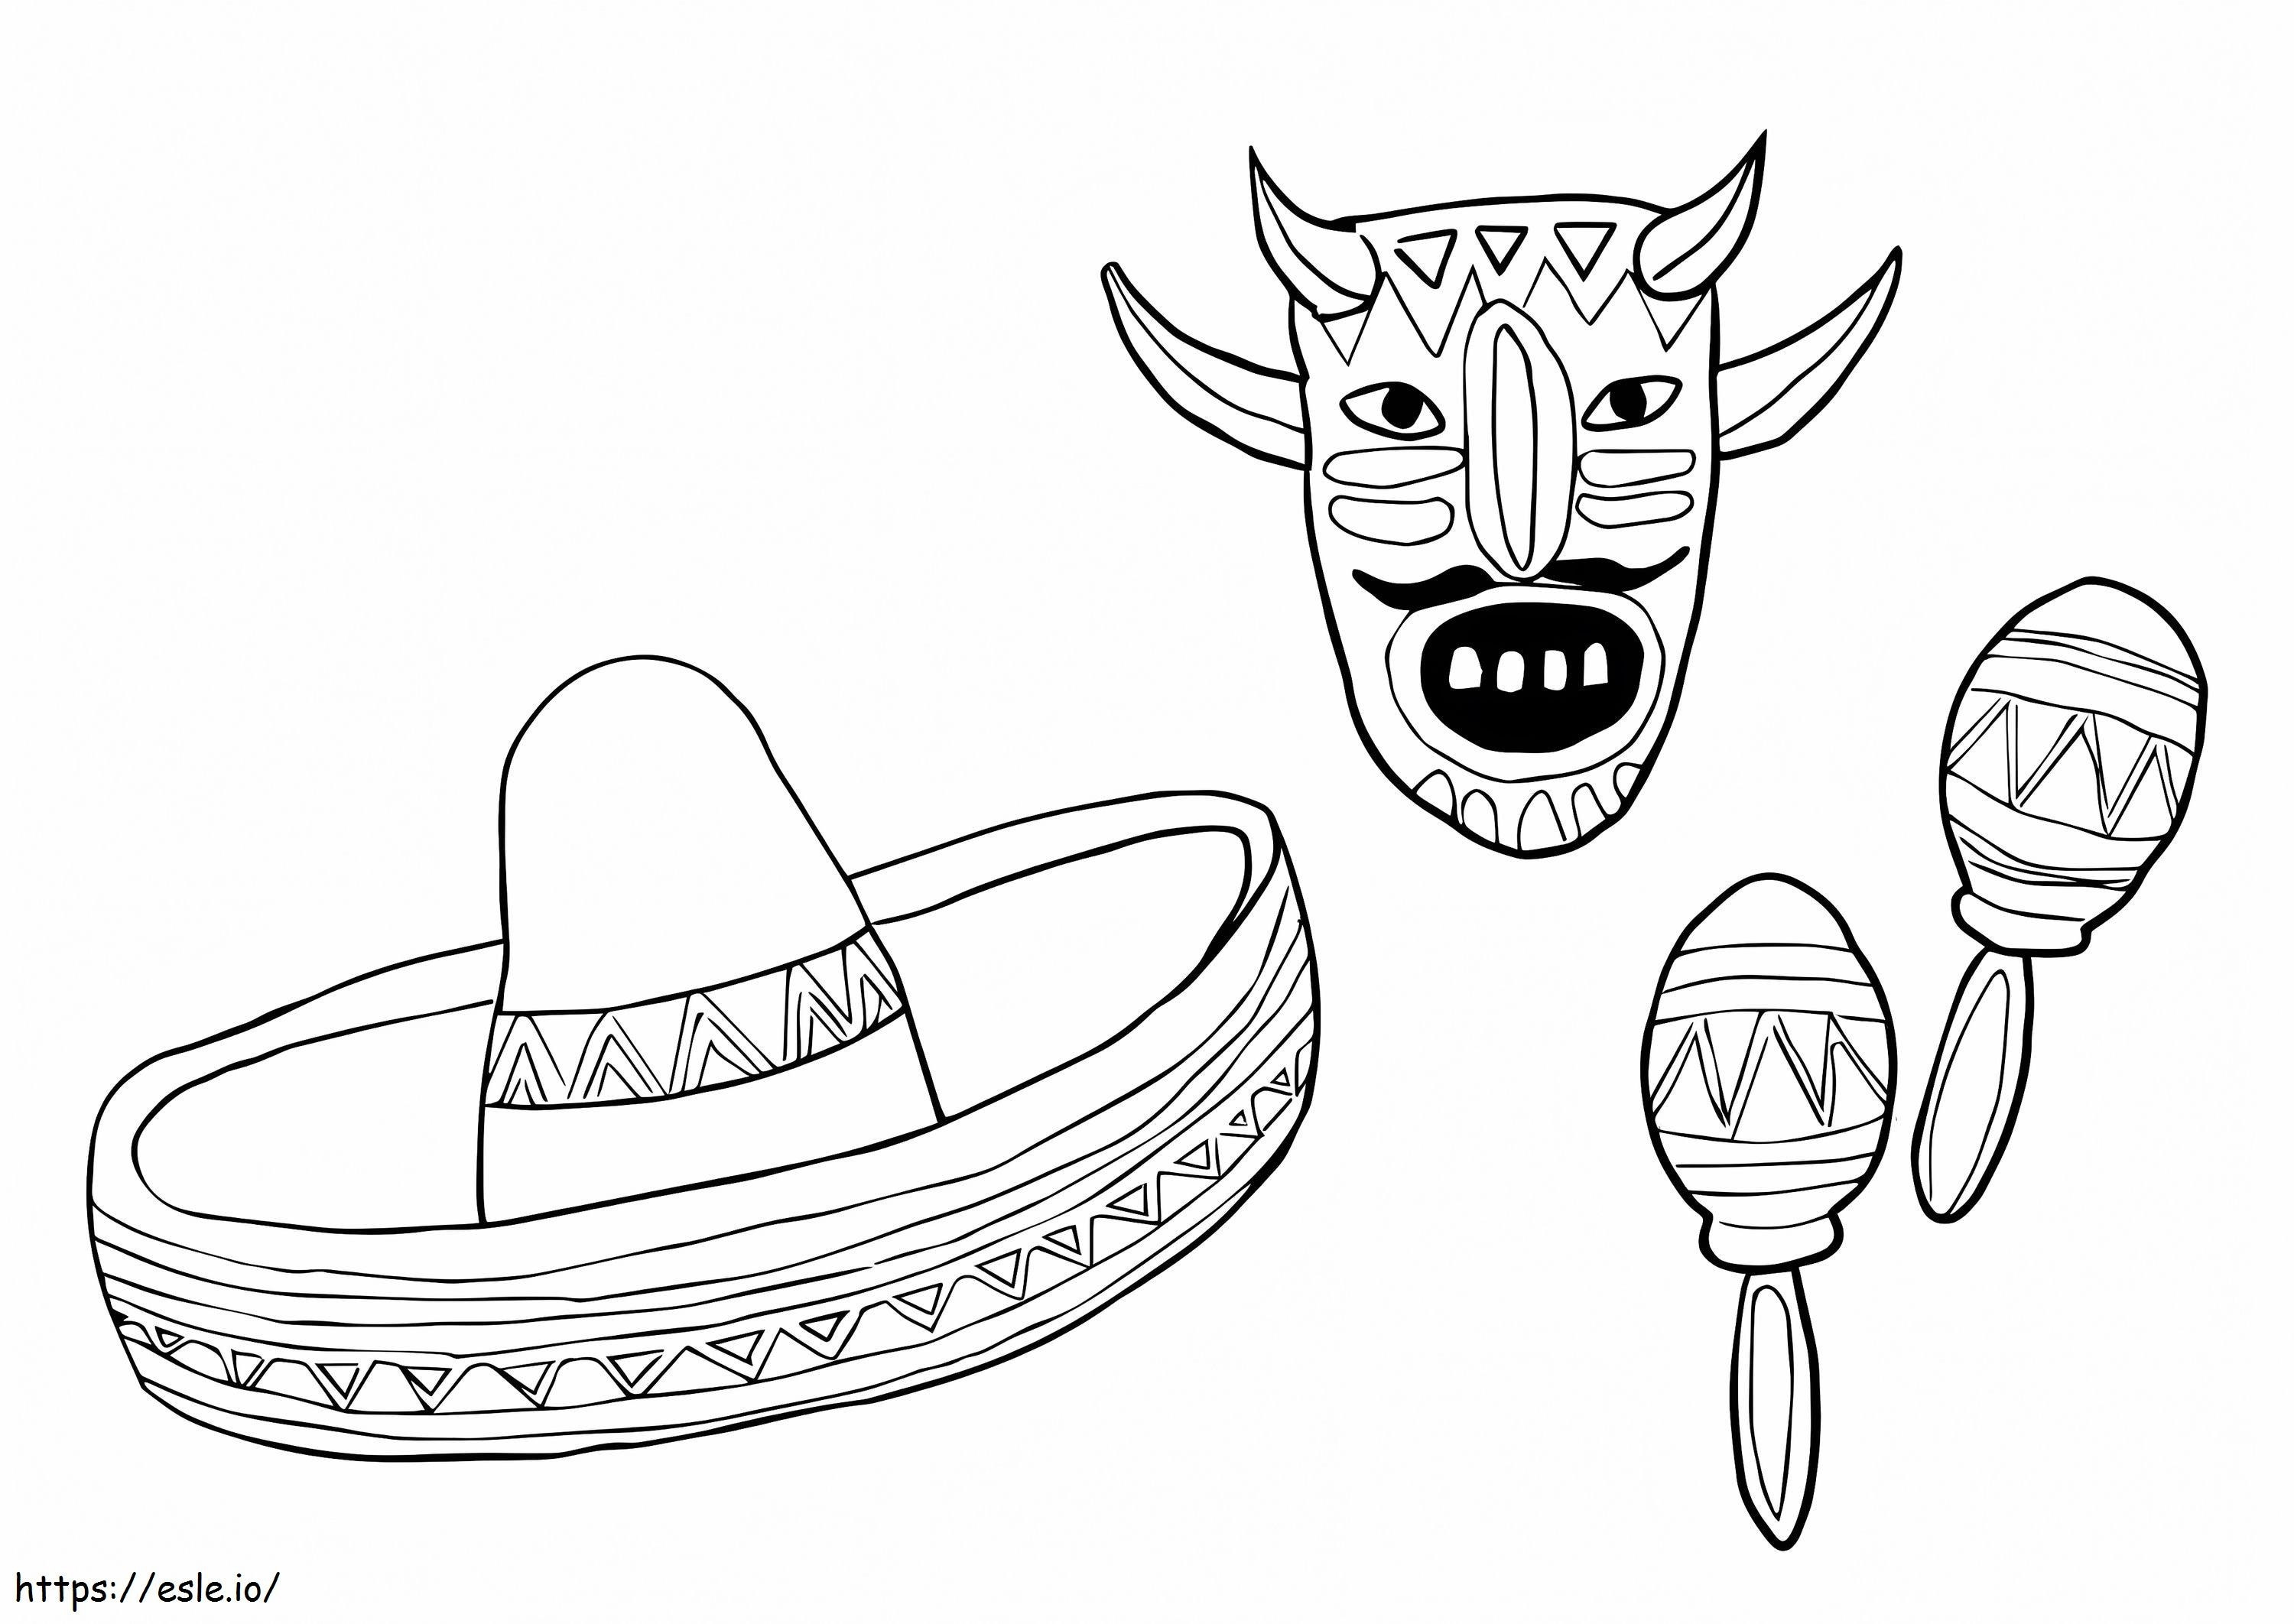 Coloriage Masque Sombrero Et Maracas à imprimer dessin